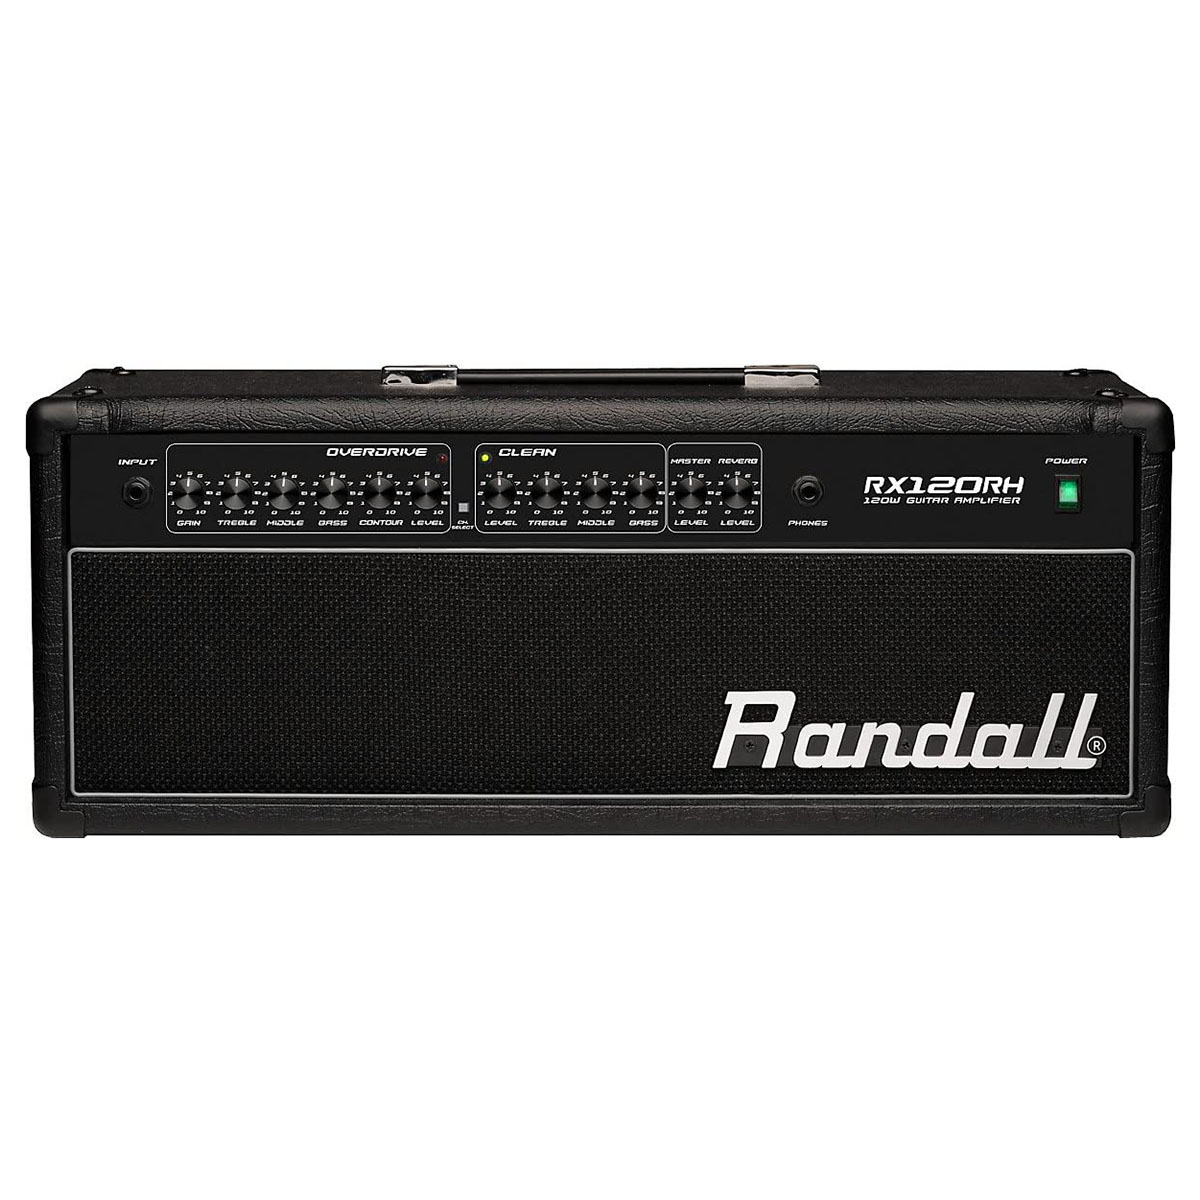 RANDALL RX120RH DITRONICS 2